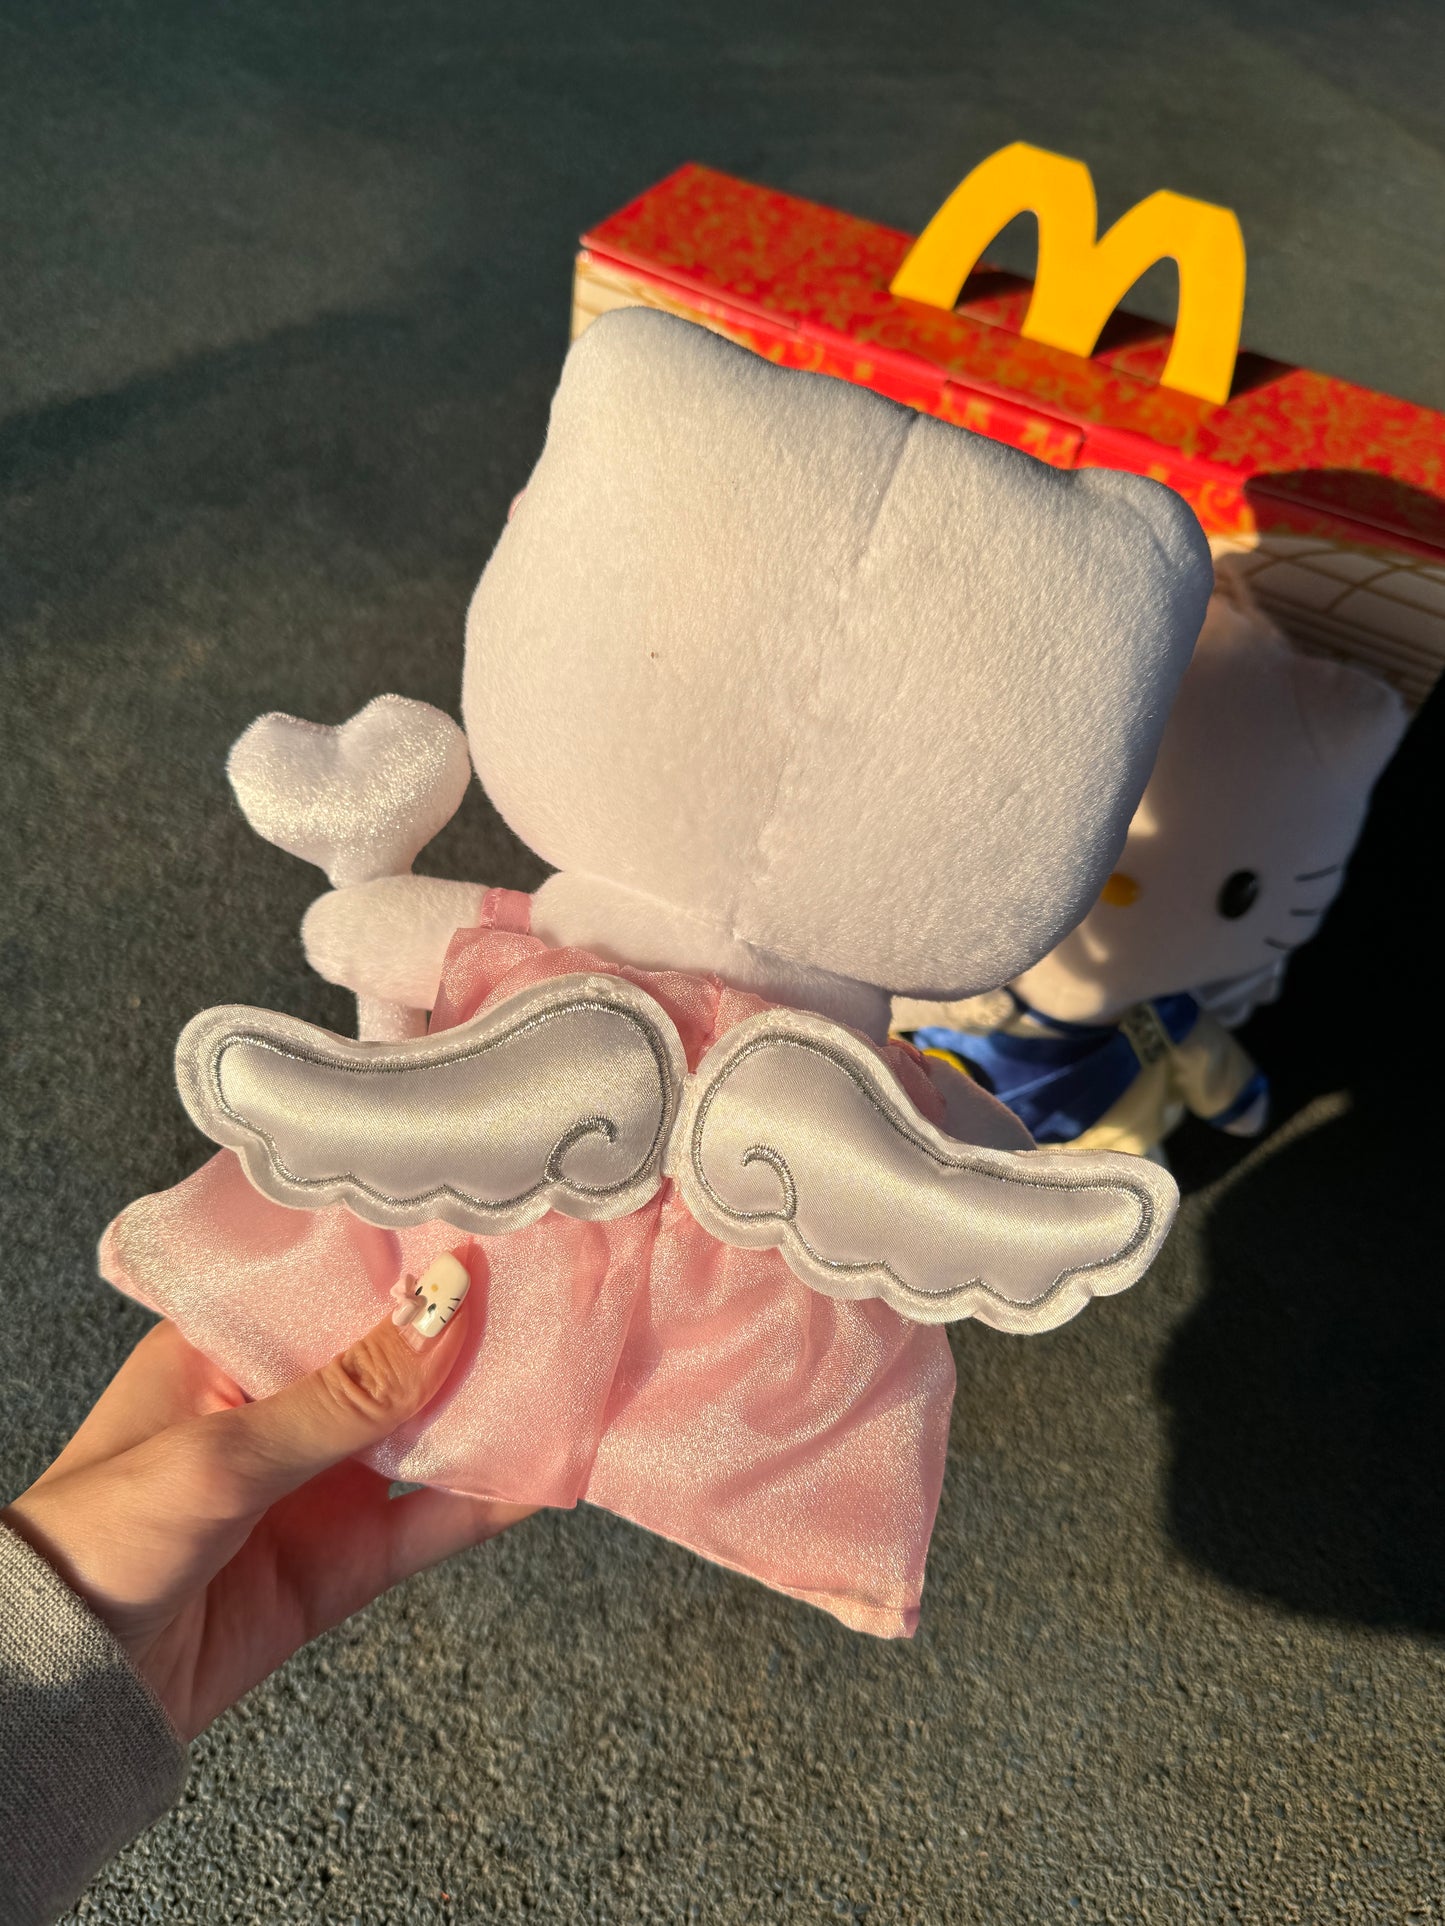 Macdonald Hello Kitty & Daniel Cupid Valentine Plush